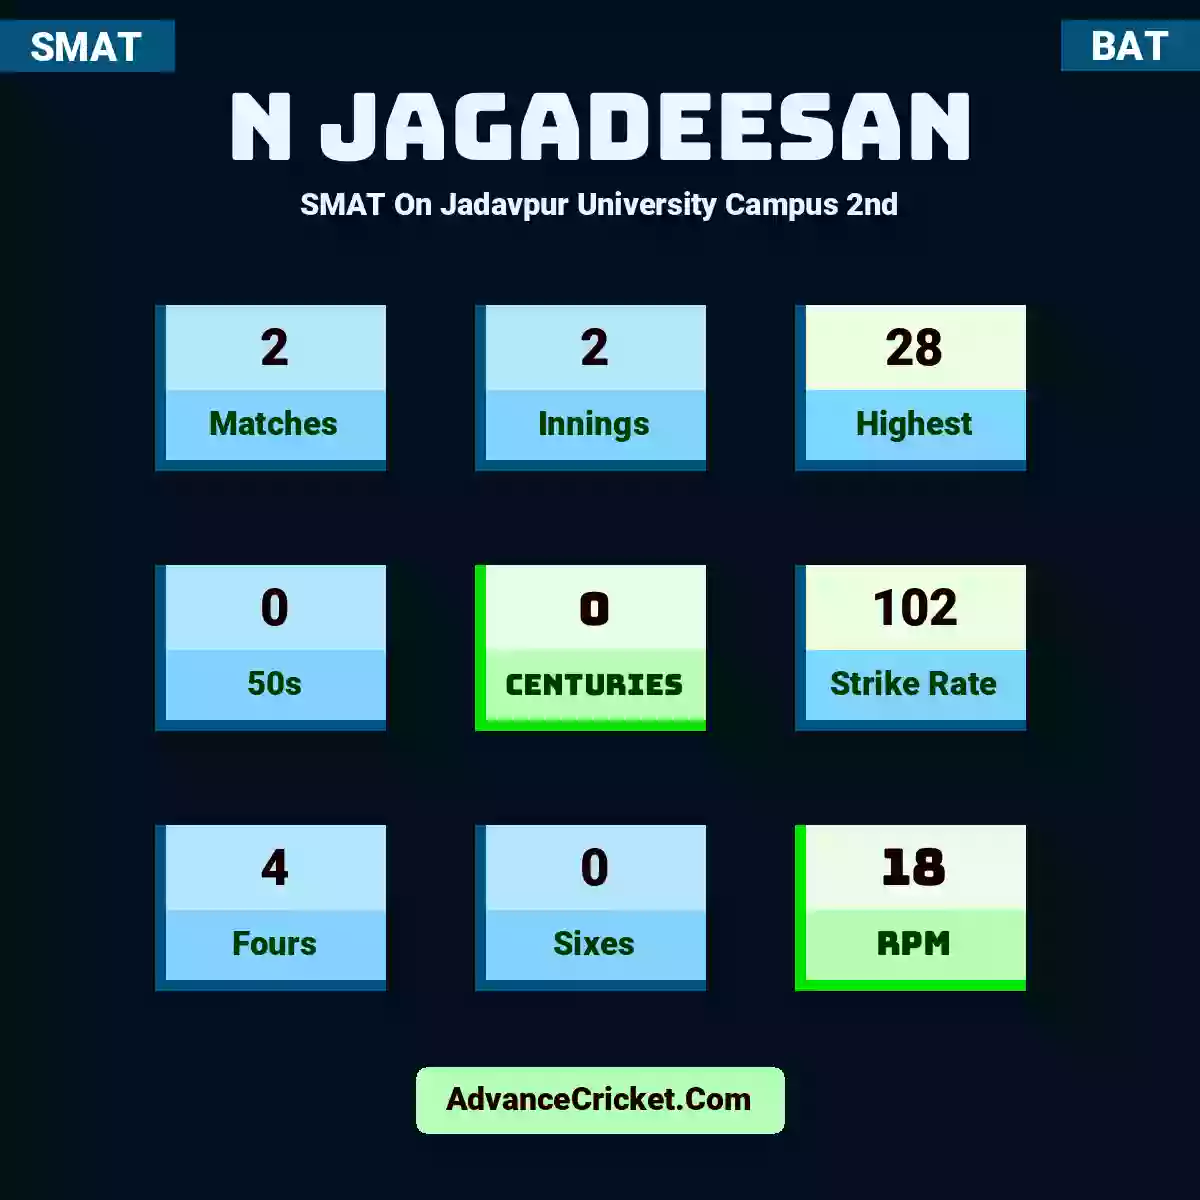 N Jagadeesan SMAT  On Jadavpur University Campus 2nd, N Jagadeesan played 2 matches, scored 28 runs as highest, 0 half-centuries, and 0 centuries, with a strike rate of 102. N.Jagadeesan hit 4 fours and 0 sixes, with an RPM of 18.